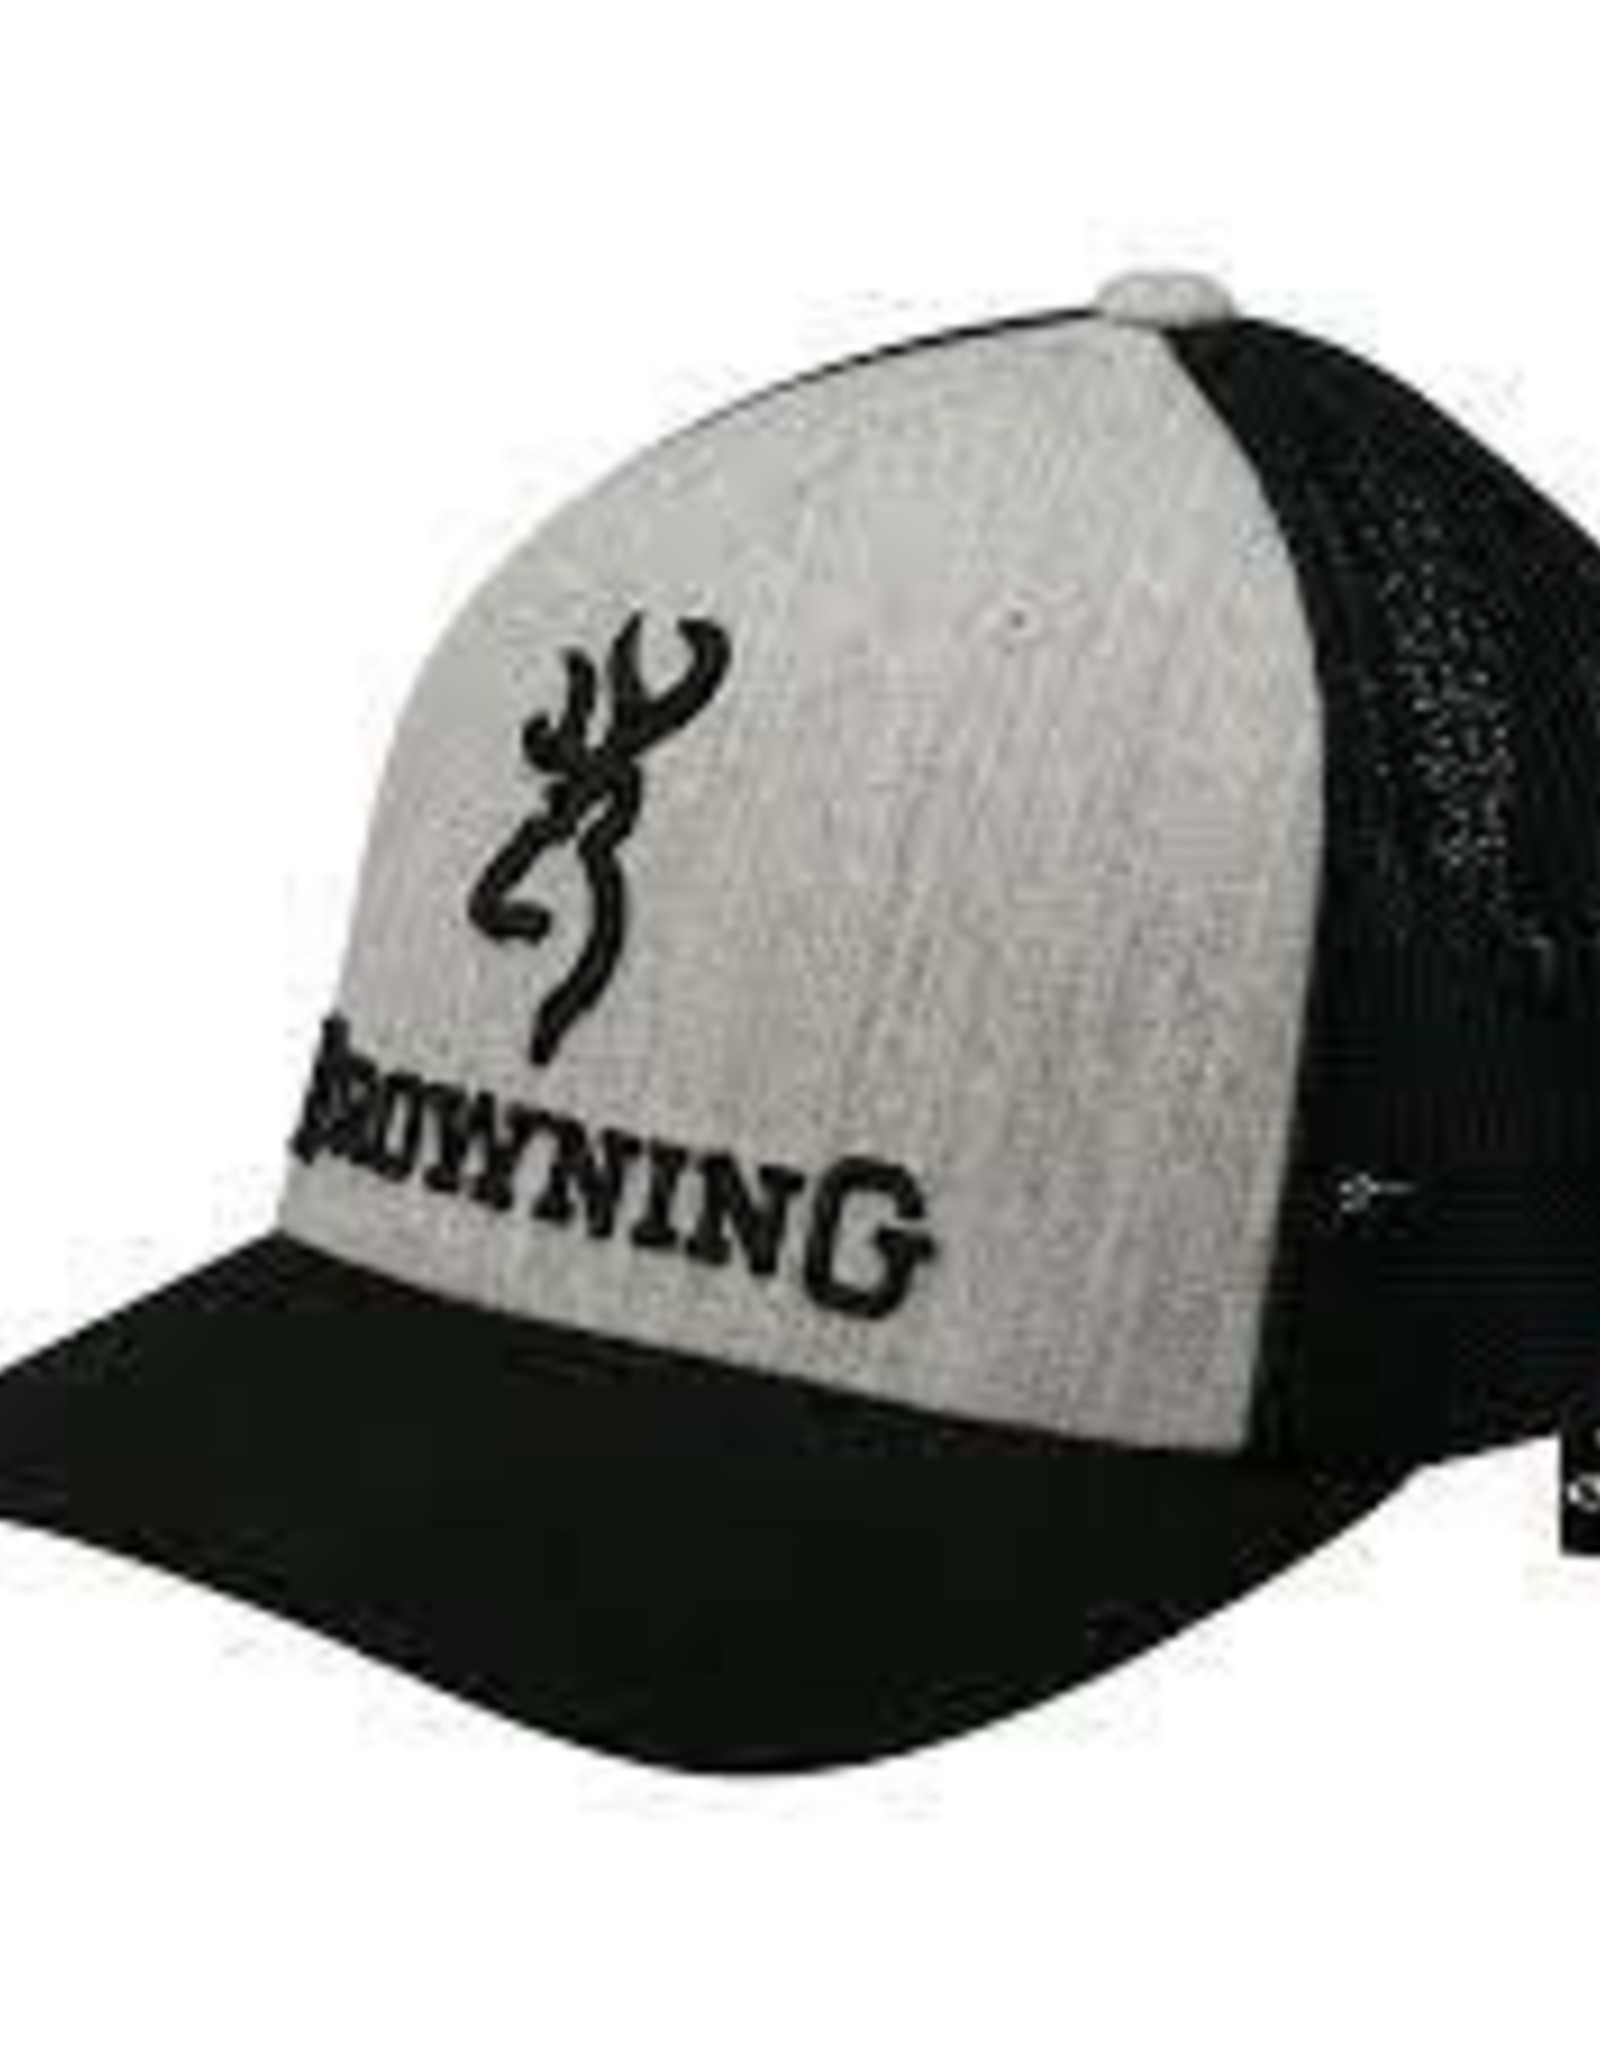 Browning CAP, COLSTRIP HEATHER L/XL